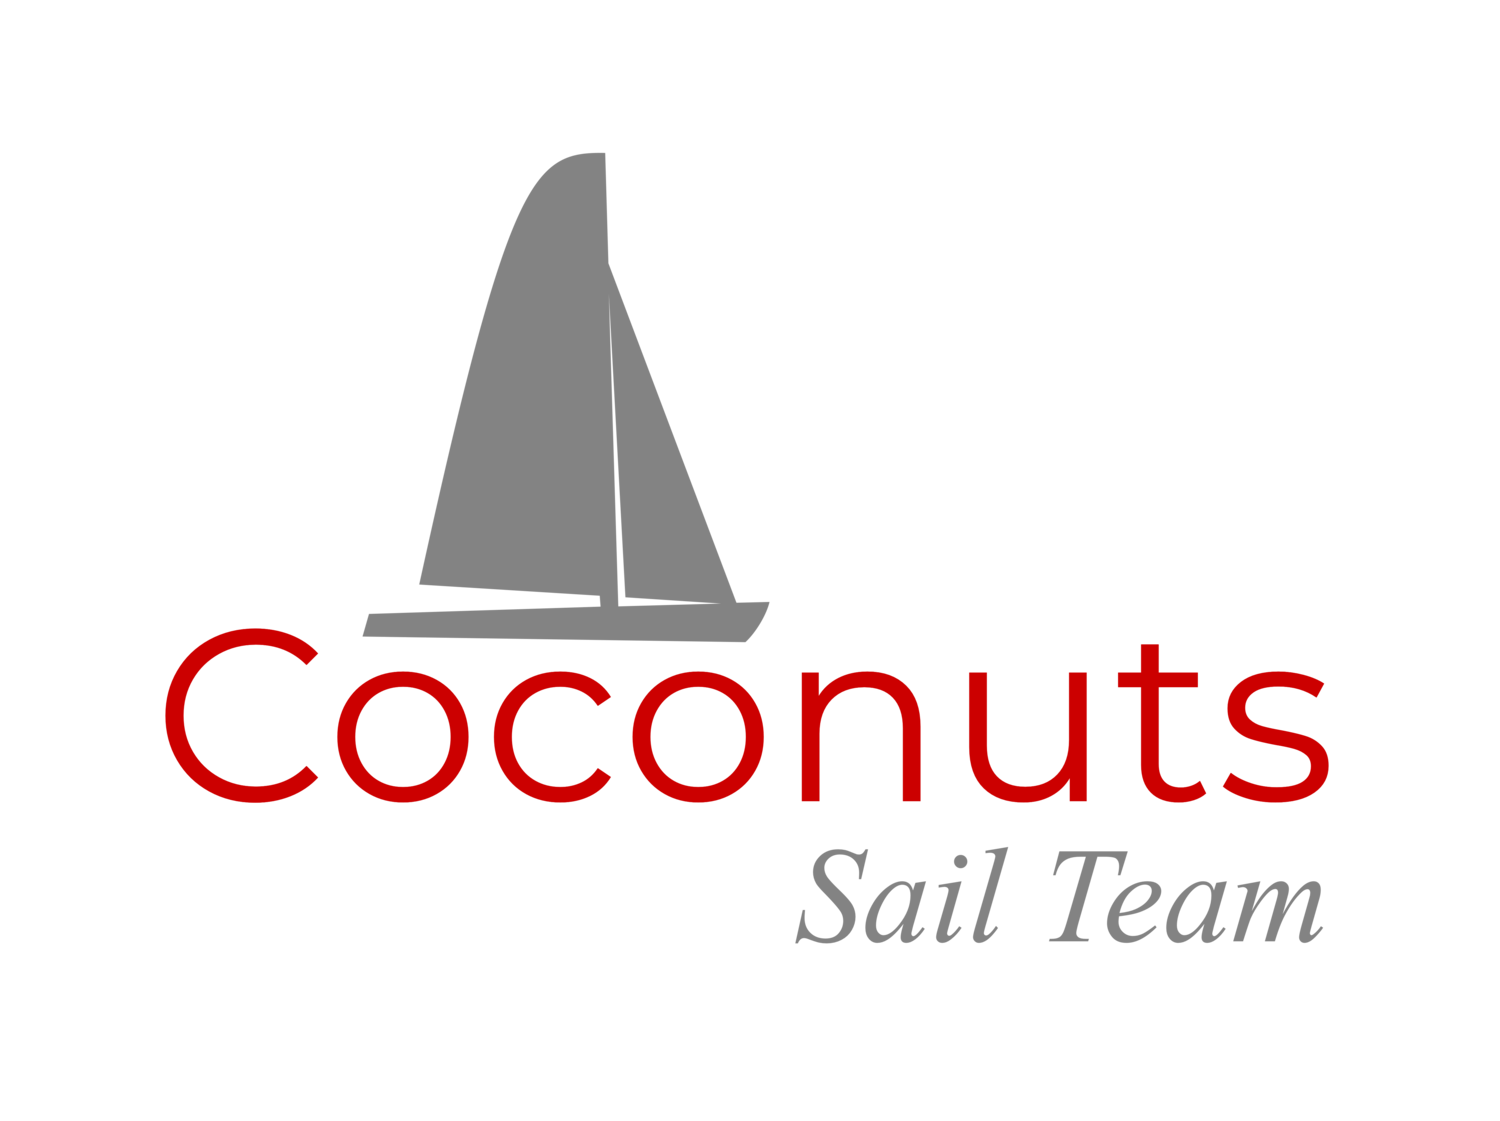 Coconuts Sail Team